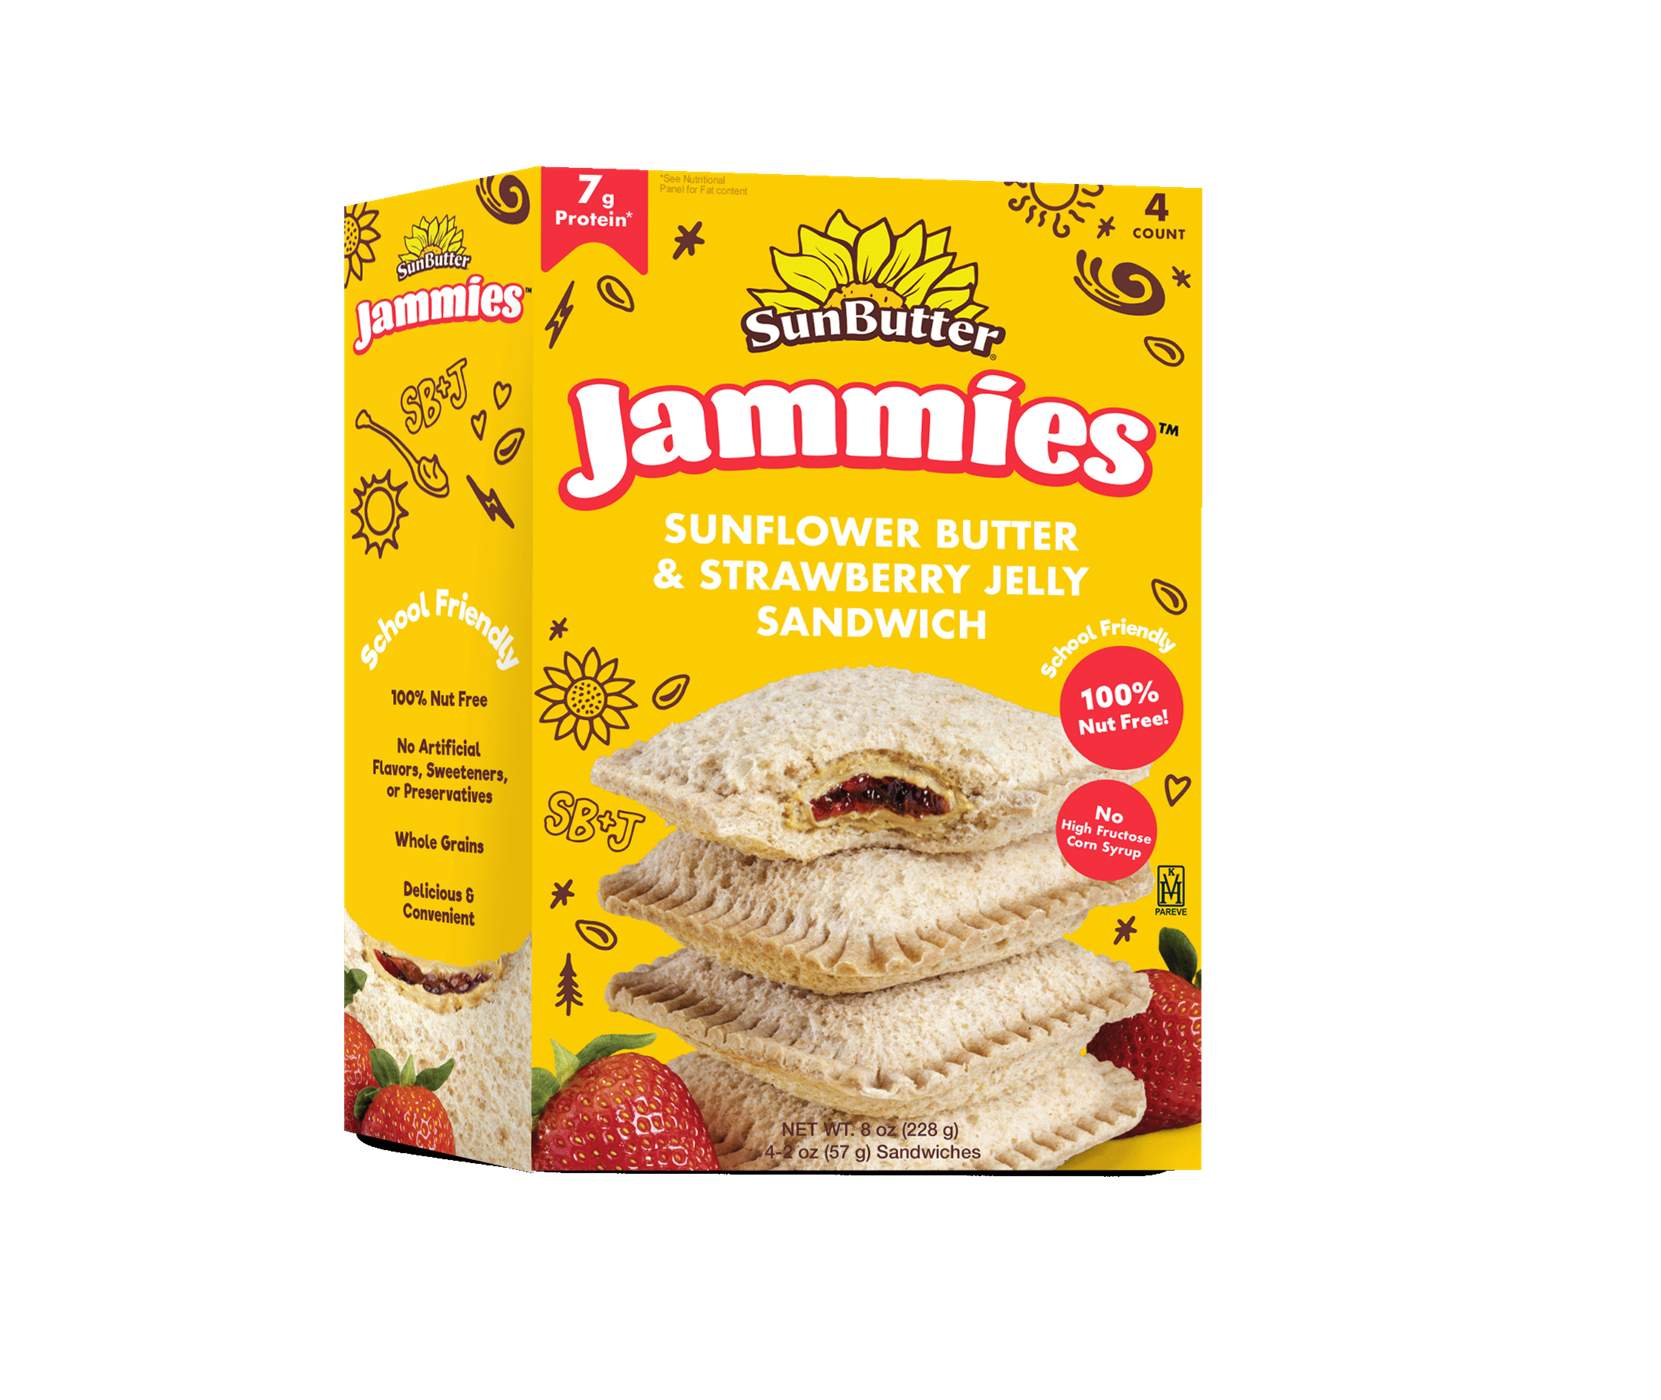 SunButter Jammies Frozen Sandwiches - Sunflower Butter & Strawberry Jelly; image 2 of 7